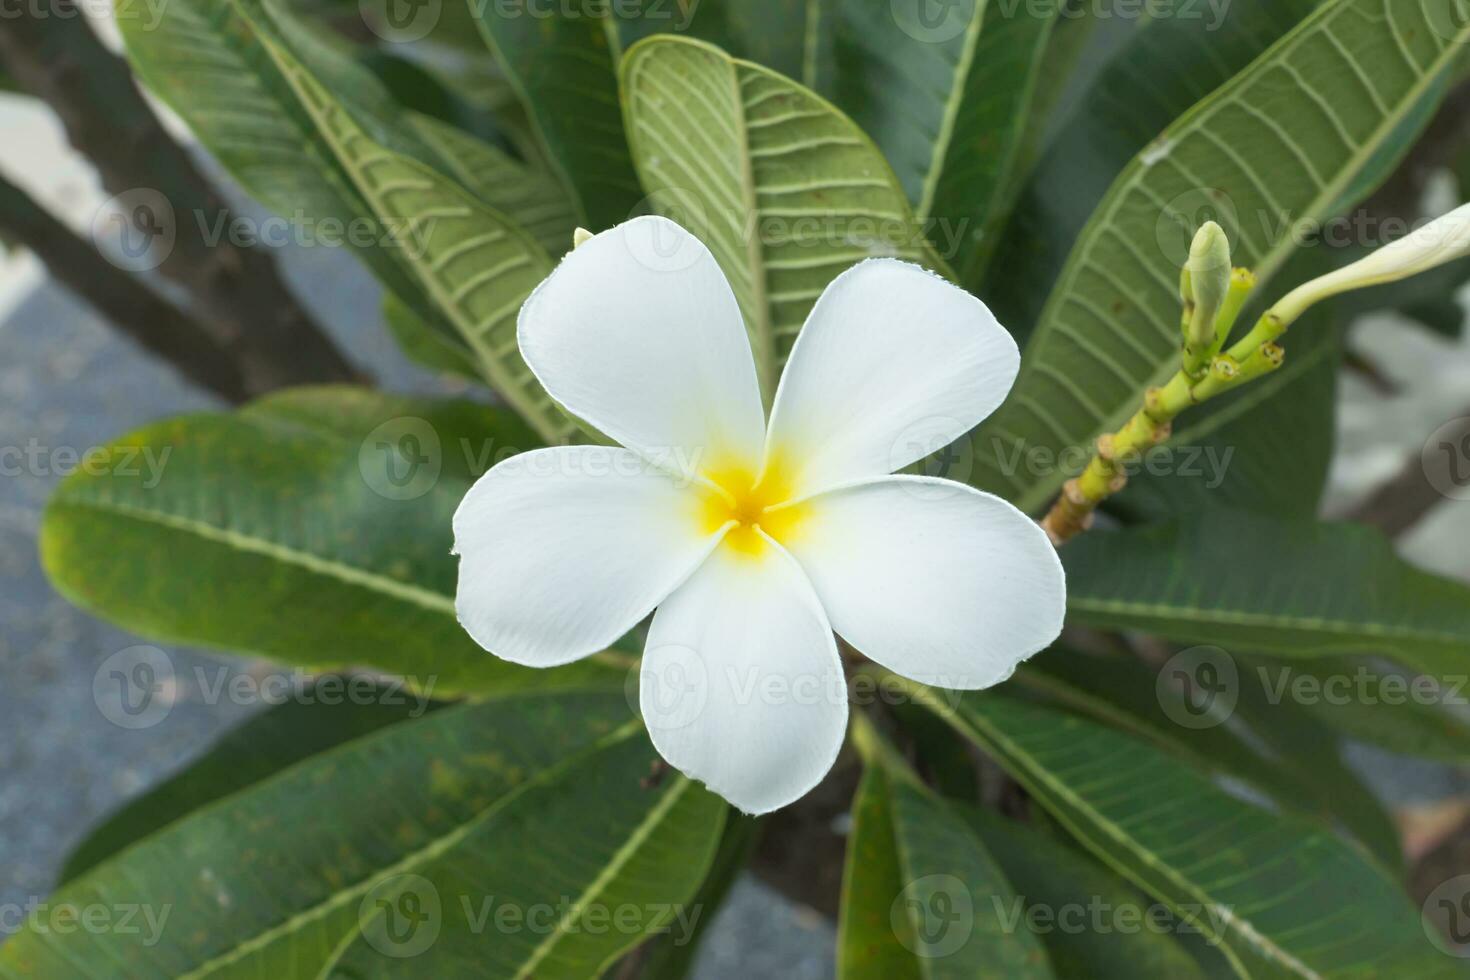 wit van frangipani bloem Aan de boom. foto